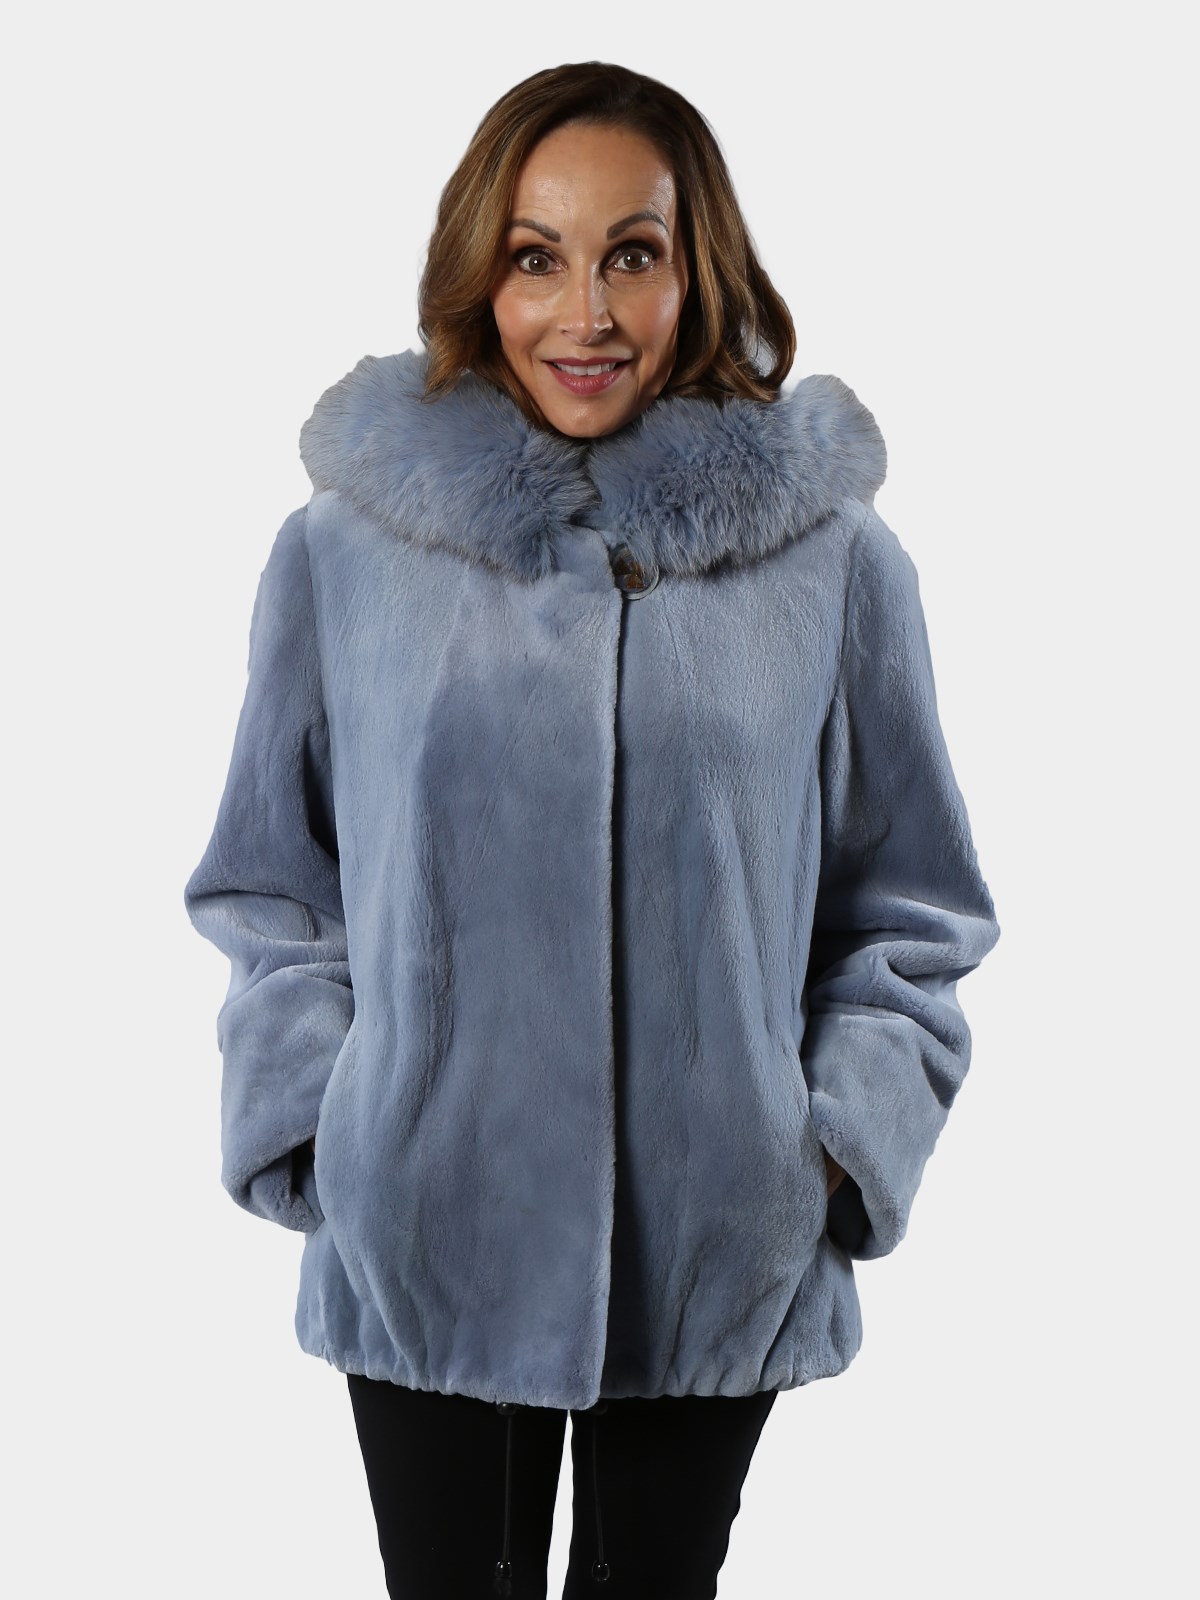 Vesting Interpretatief Heel veel goeds Women's Fur Parkas and Fabric Parkas | Estate Furs